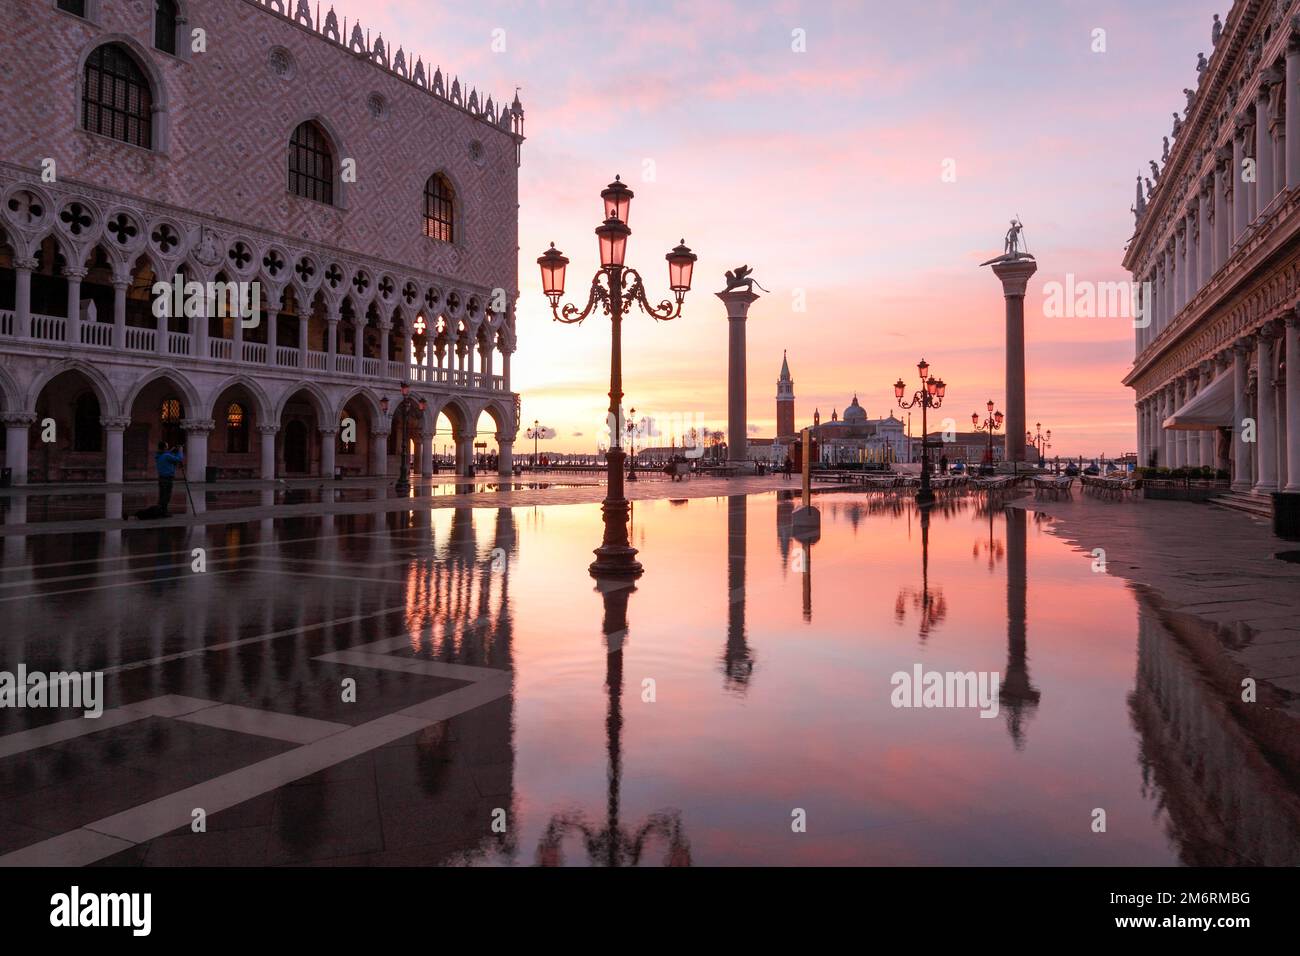 The Piazzetta in the rising sun, during the Acqua alta flood, Venice, Italy Stock Photo